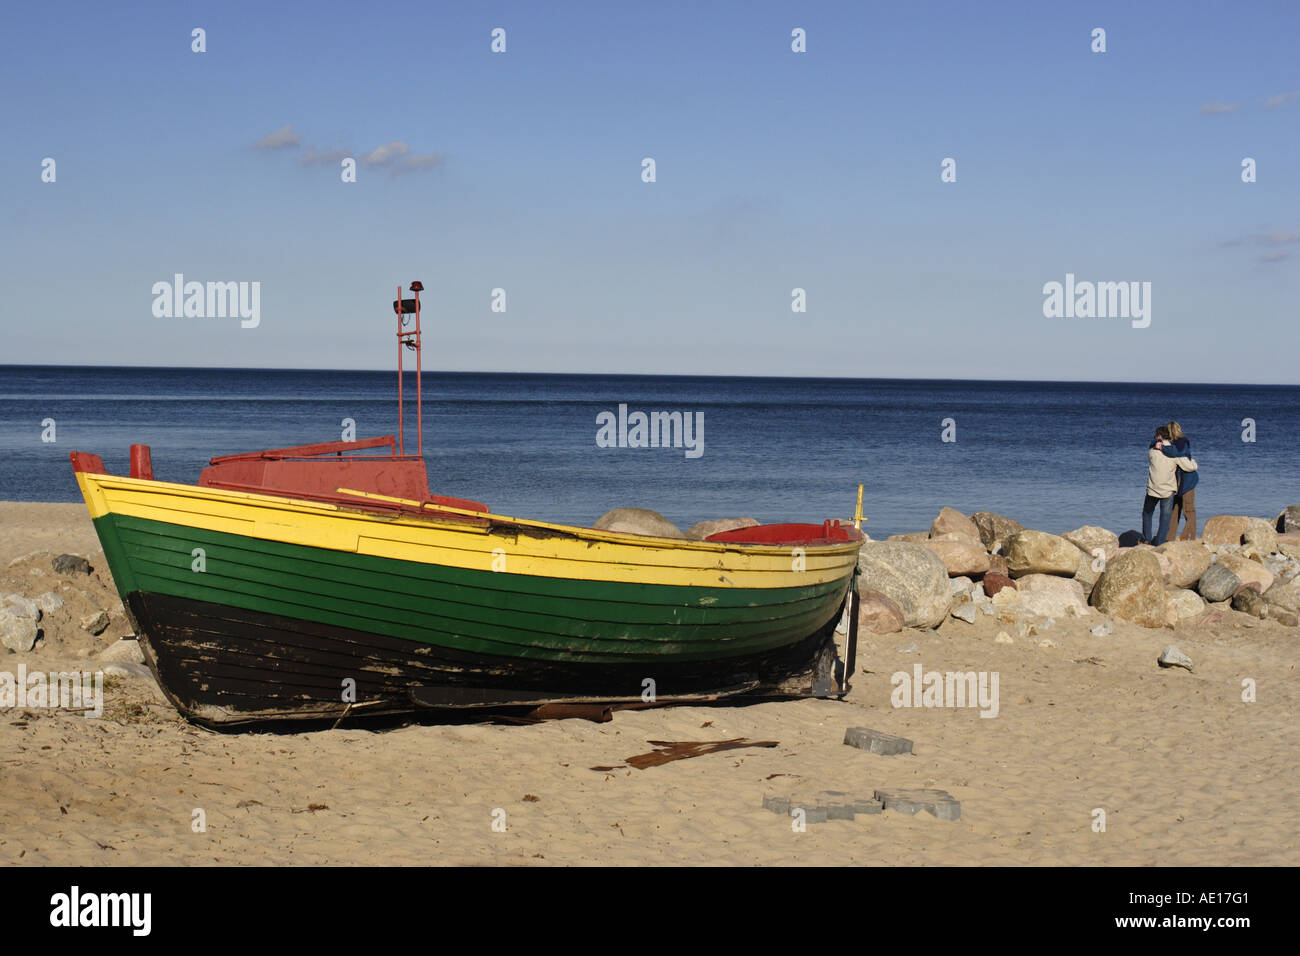 Fishing boat, Gdynia Orlowo, the Bay of Gdansk, Poland Stock Photo